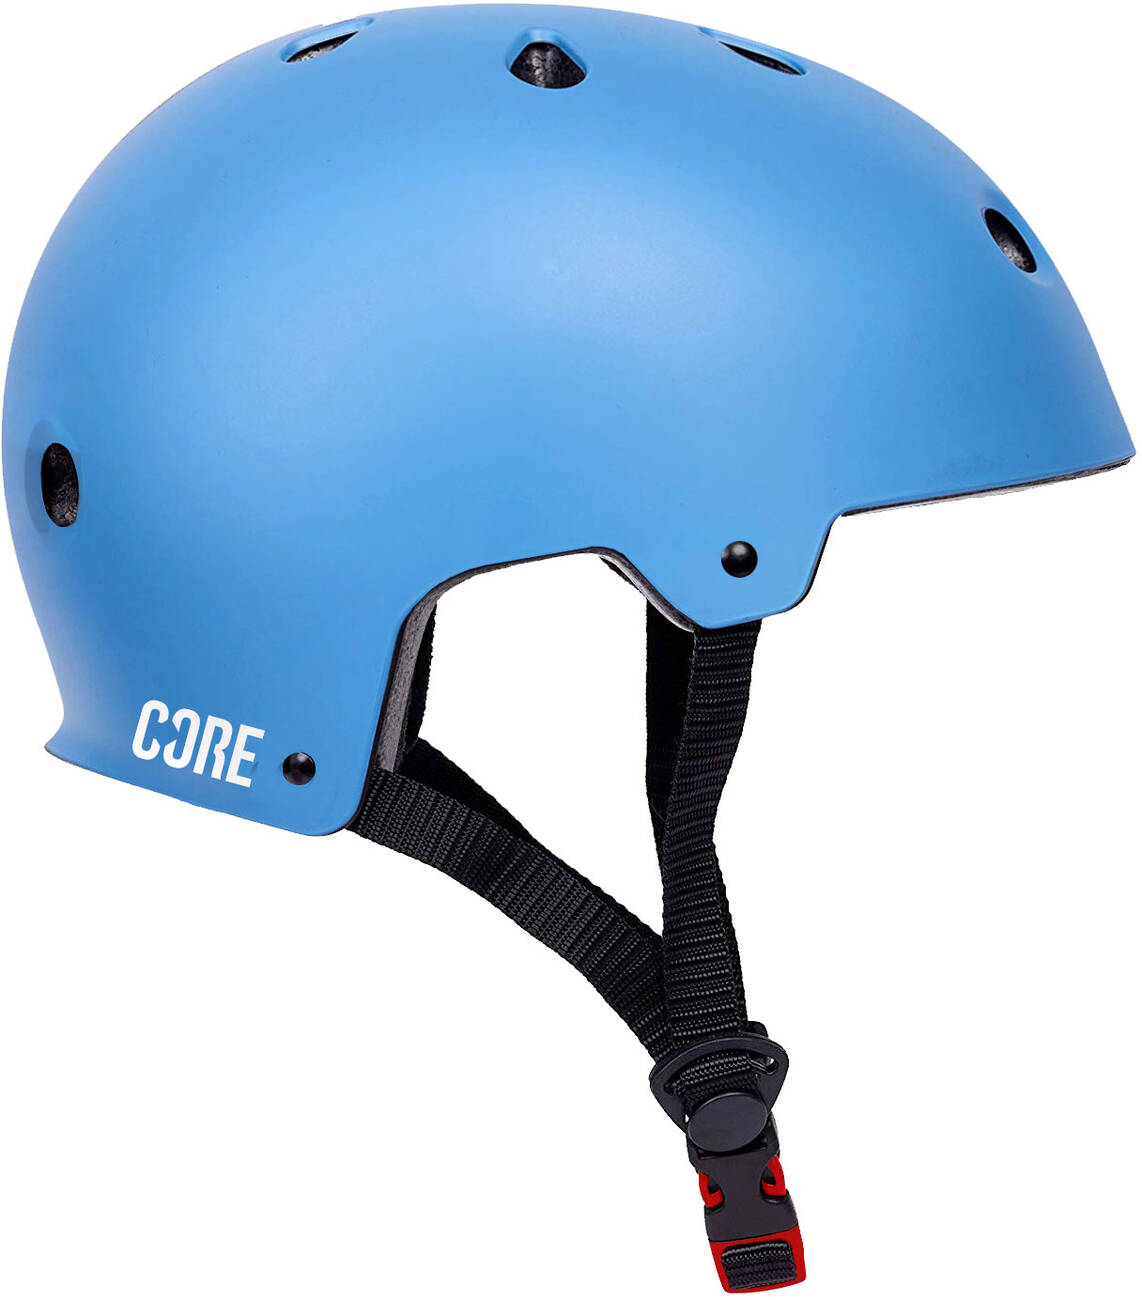 CORE Action Sports Helm Skate und Fahrradhelm blau L/XL